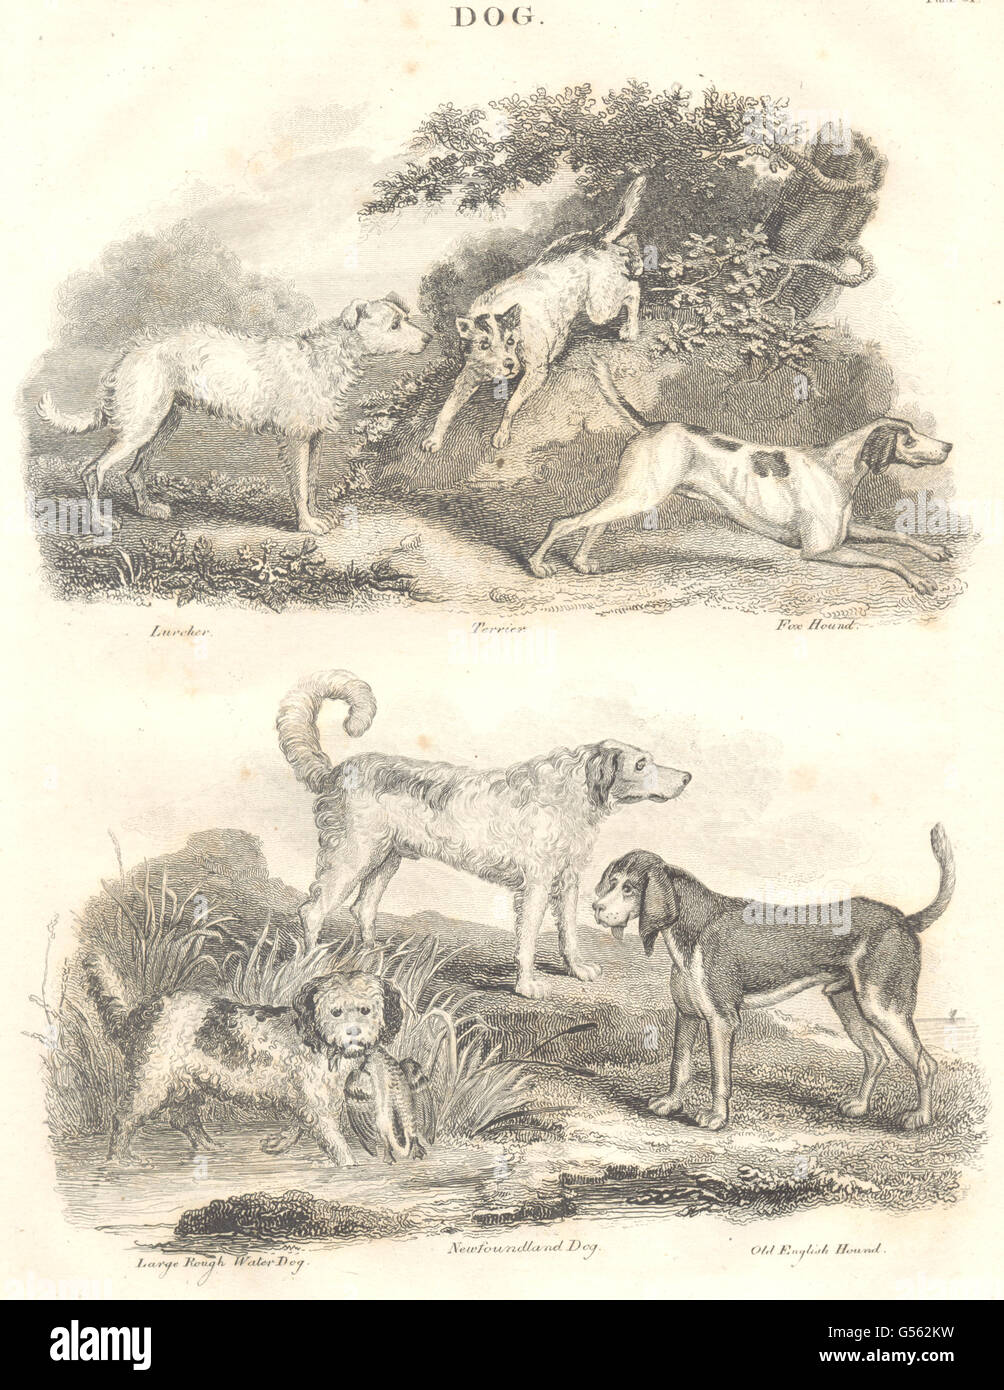 DOGS: Lurcher; Terrier; Old English, Fox Hound; Rough Waterdog; NL, print 1830 Stock Photo